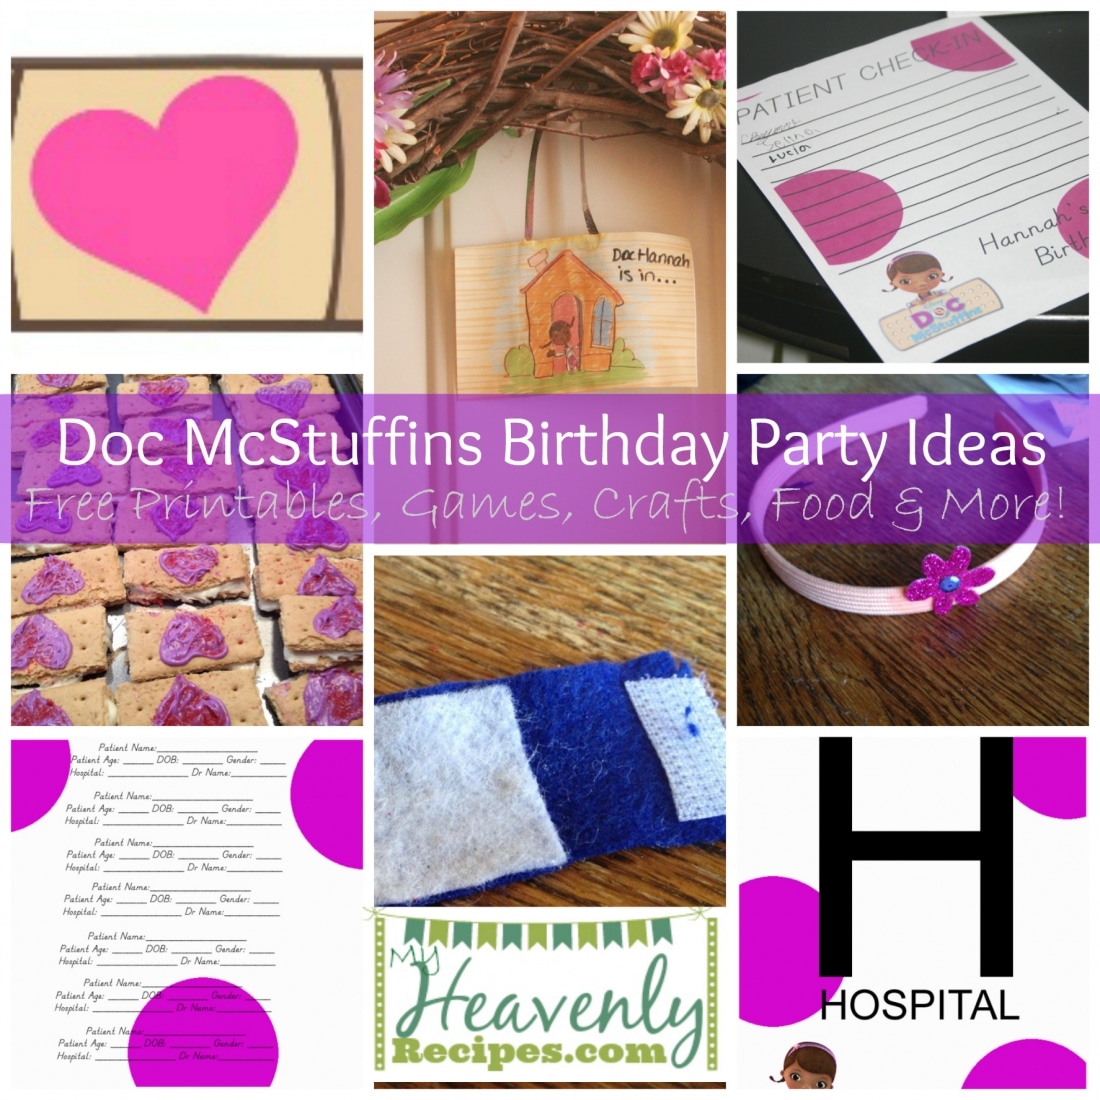 Doc McStuffins Birthday Party Ideas